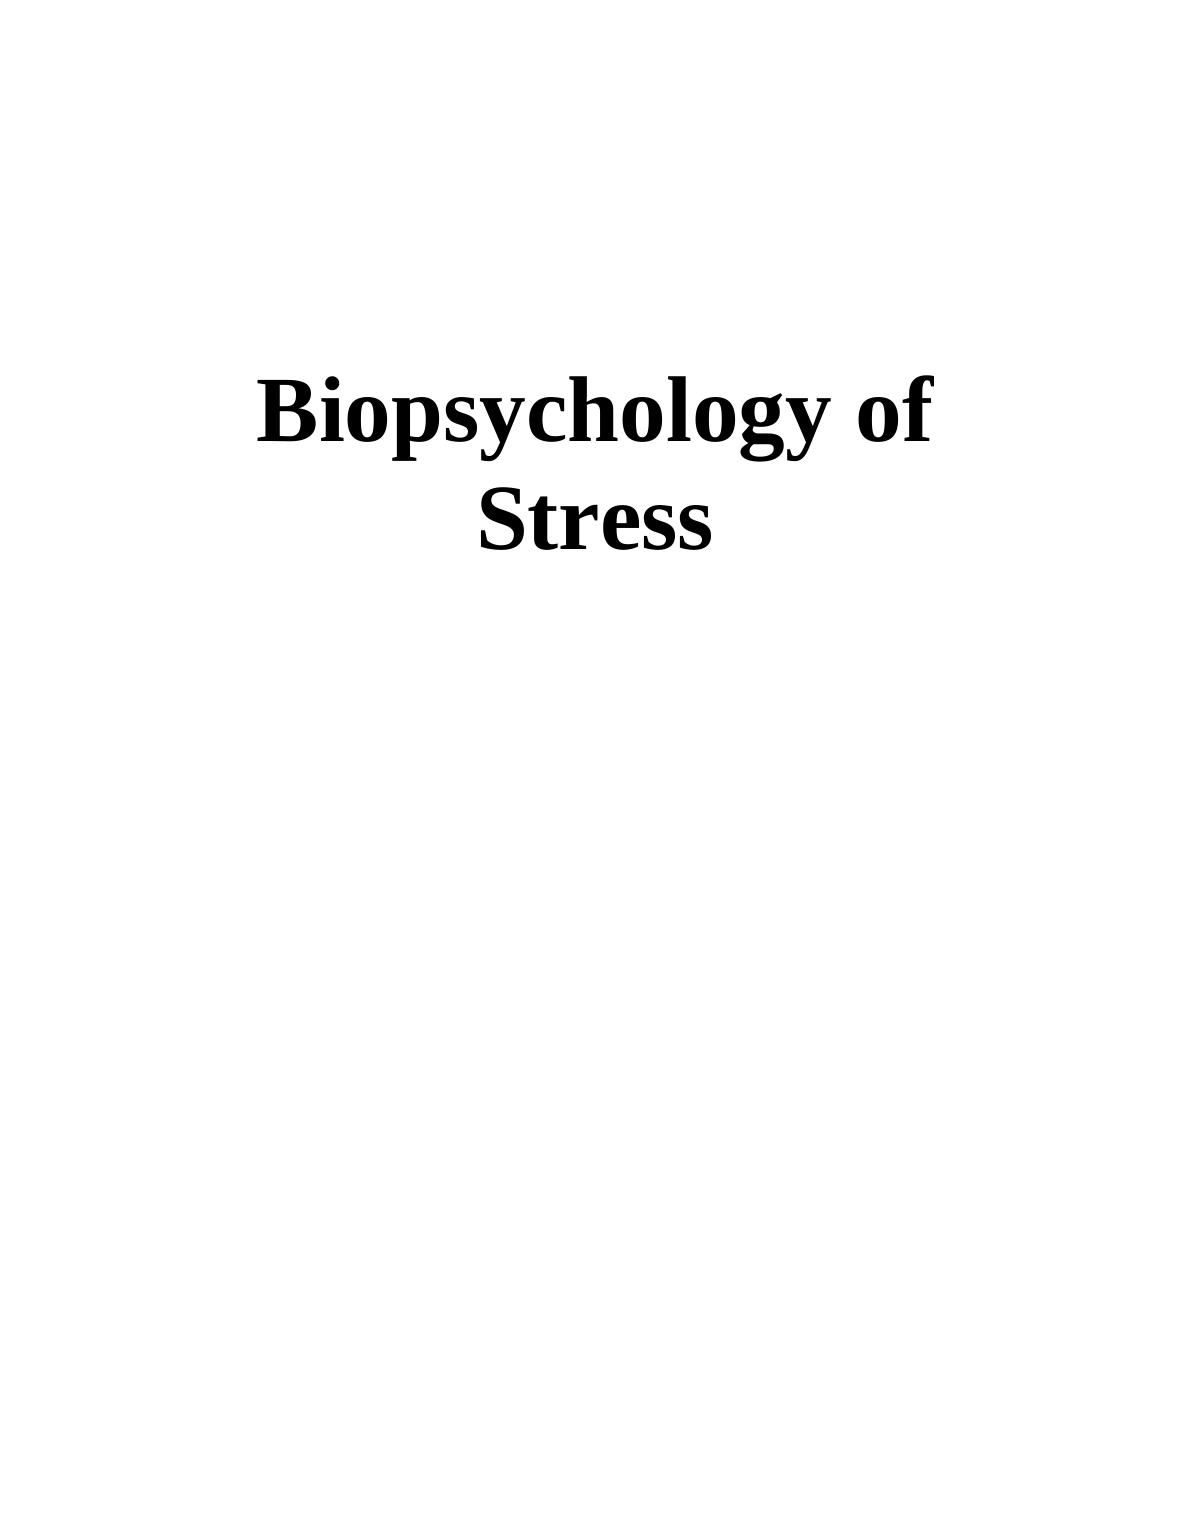 Biopsychology of Stress_1